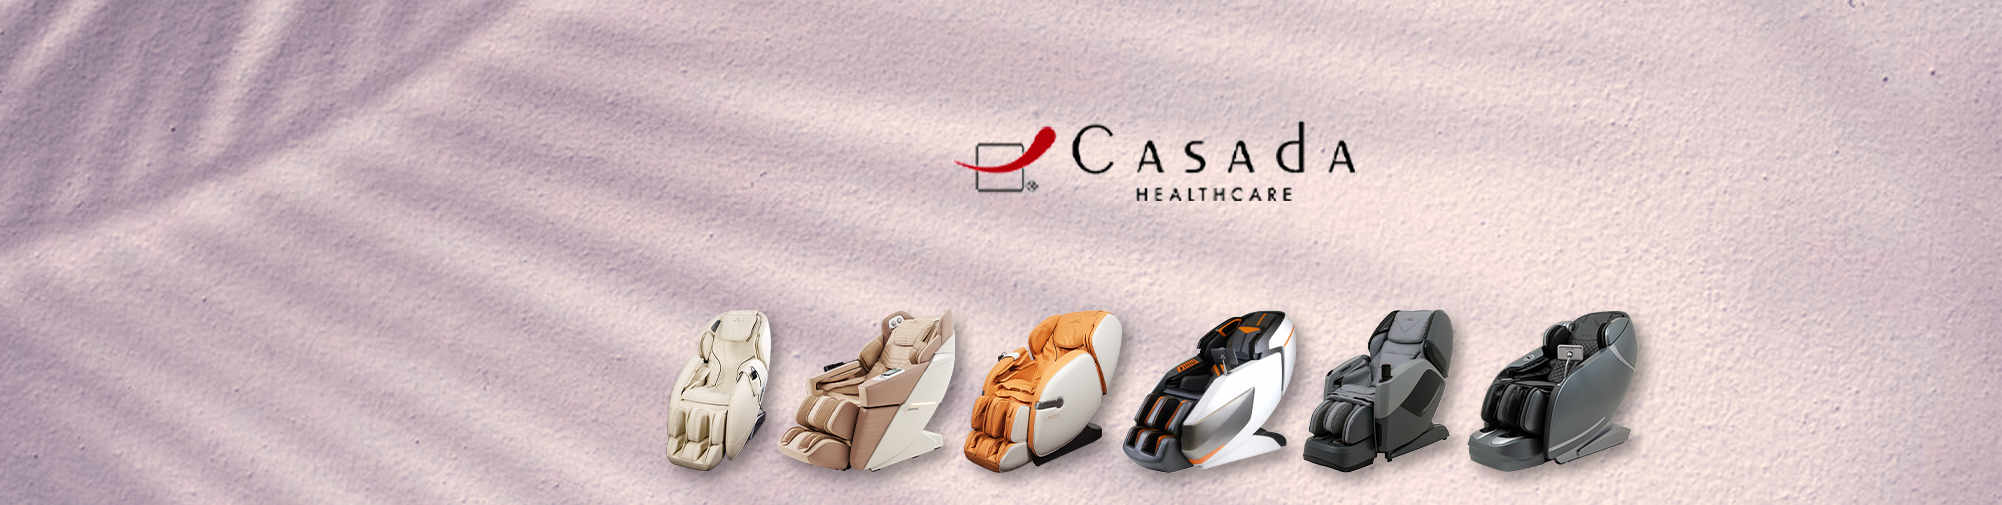 Casada - reliable partner | Massage Chair World